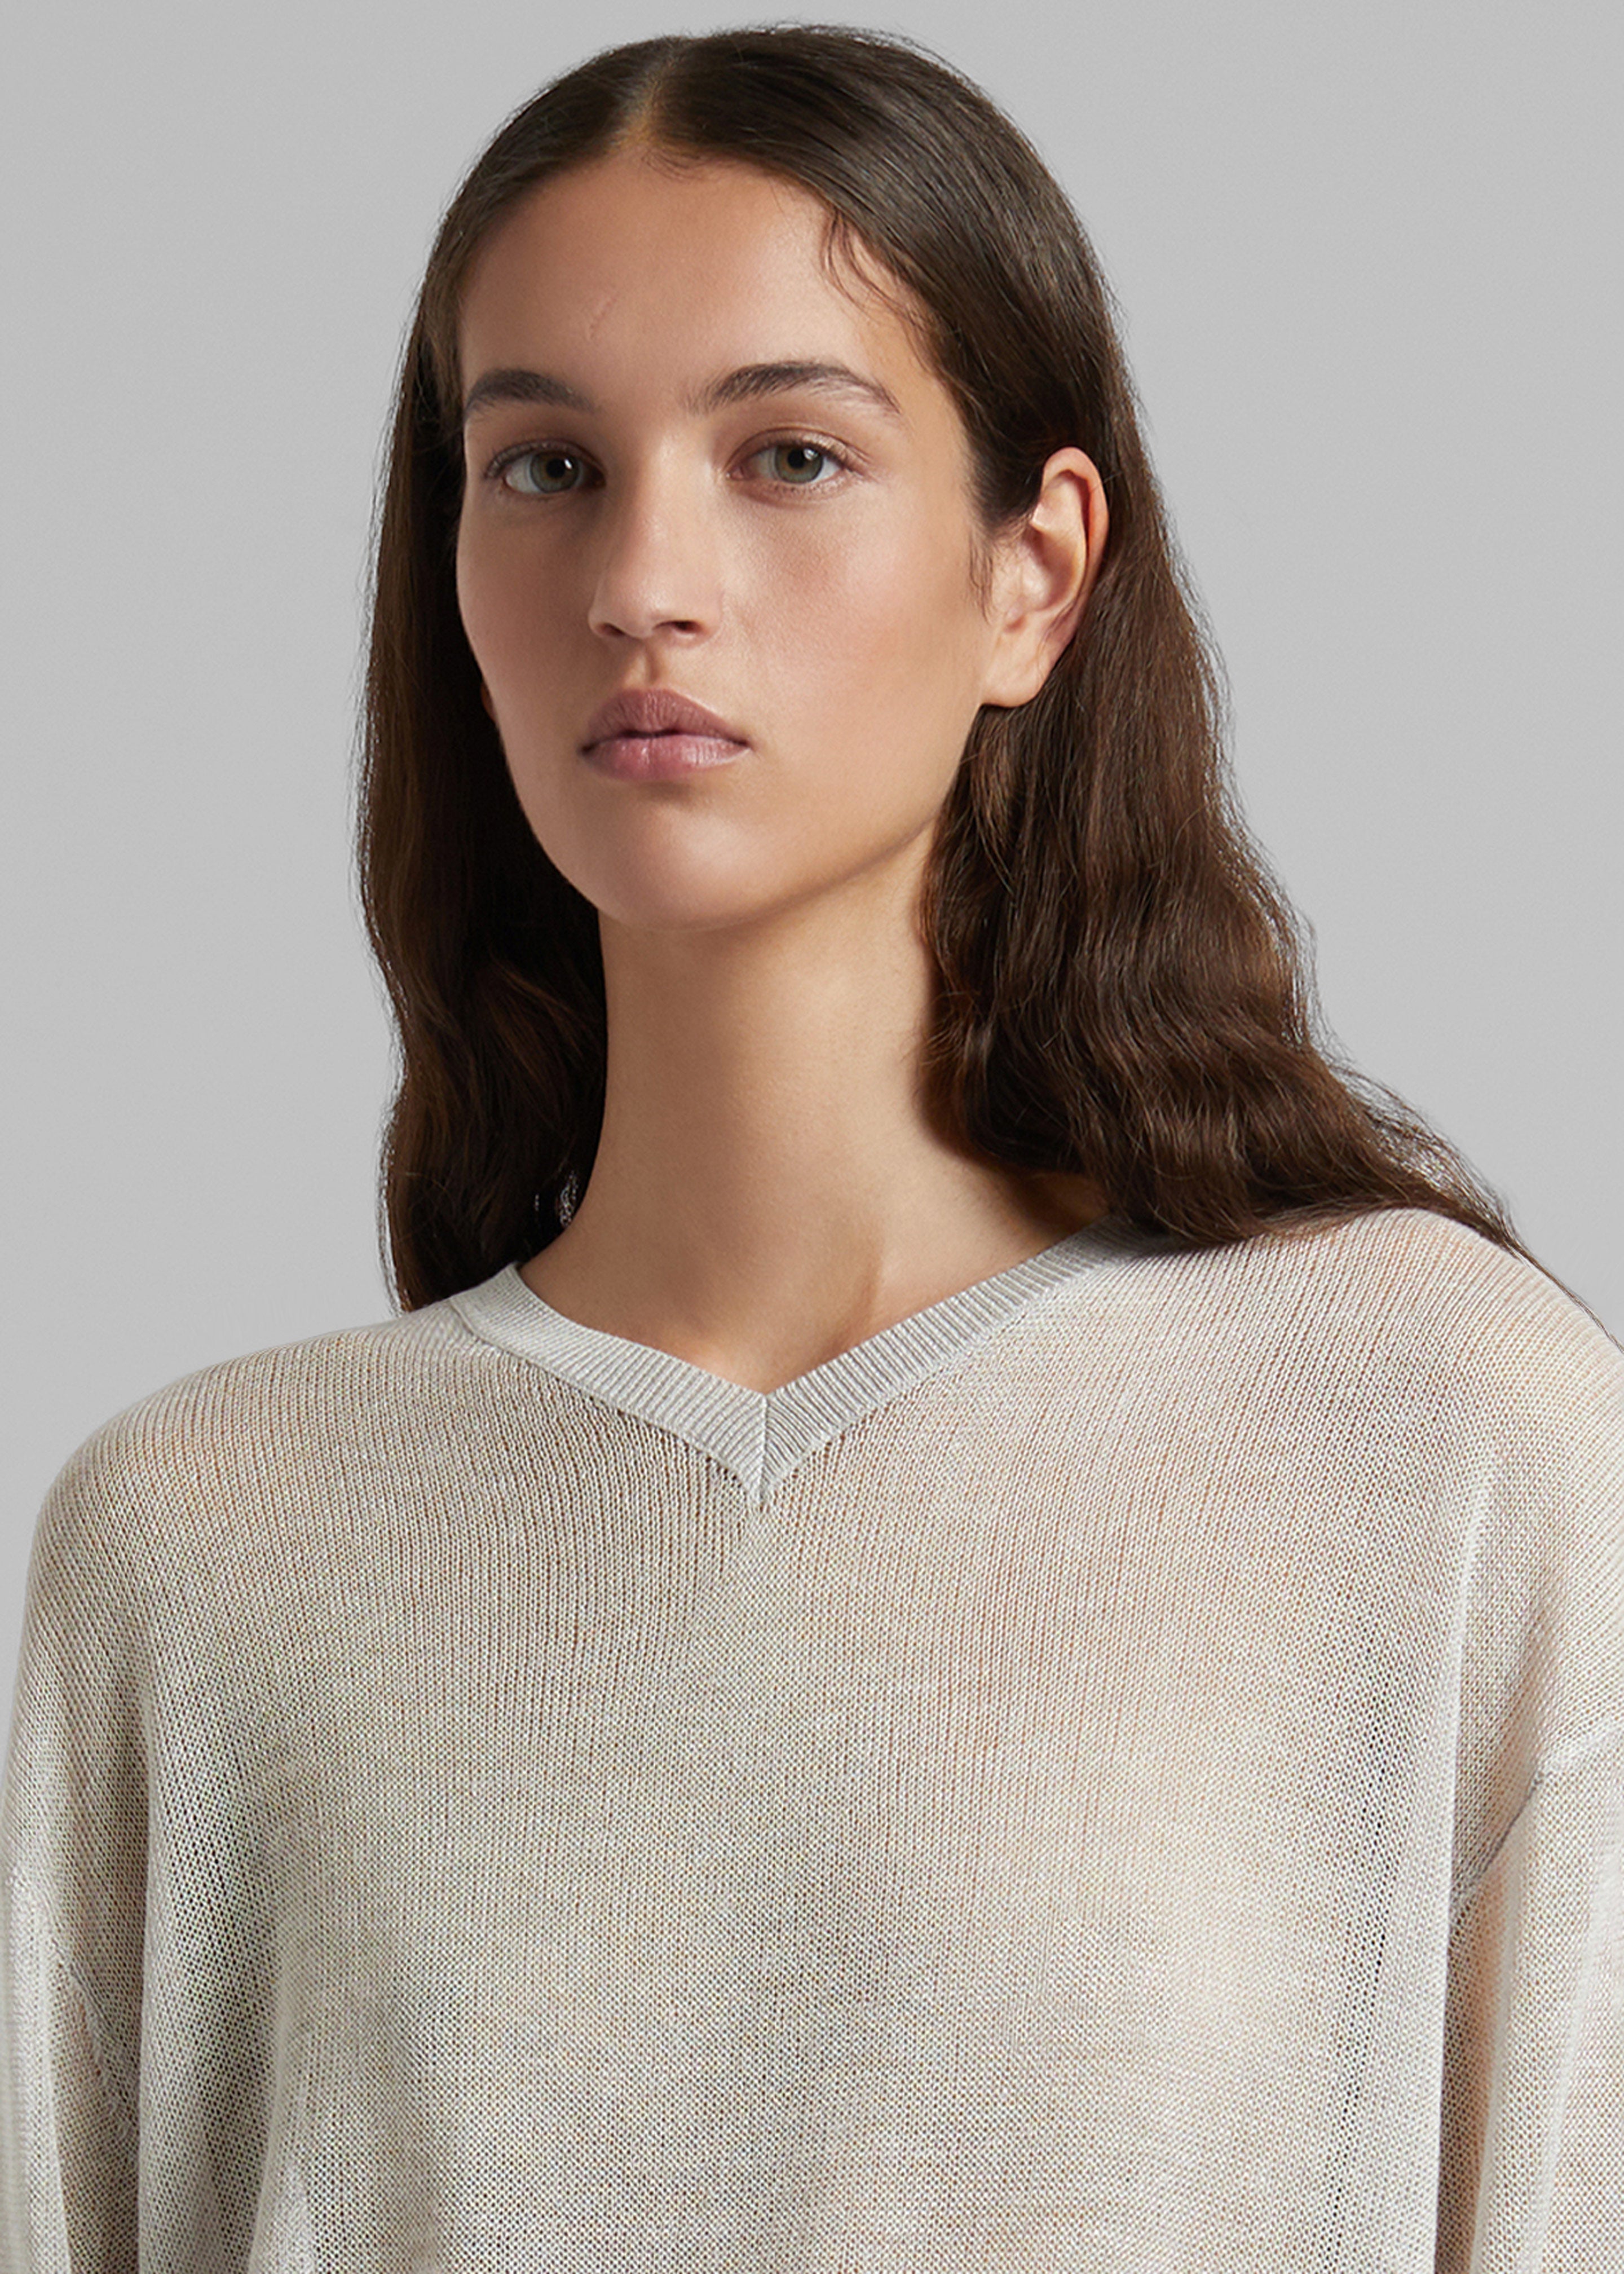 Farrah Braided Sweater - Grey Melange